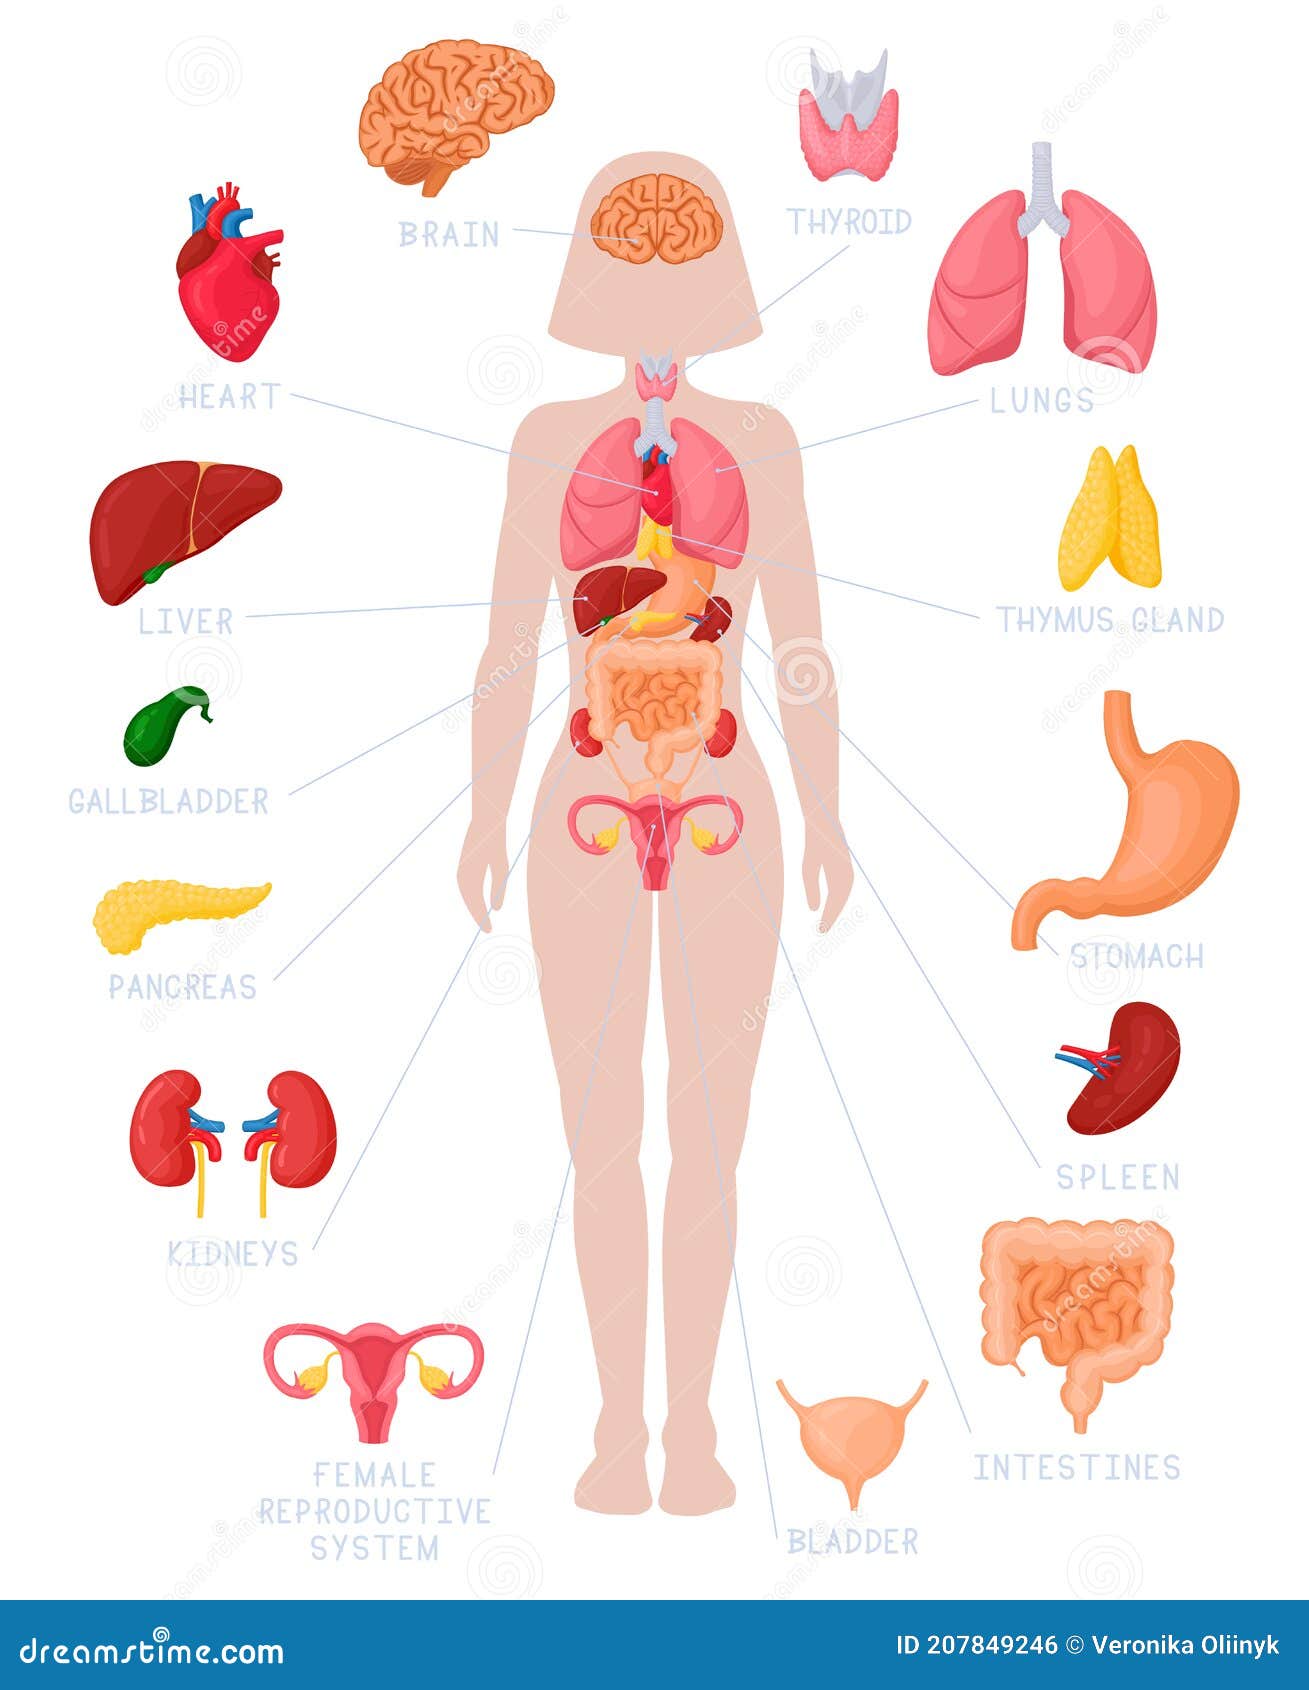 Woman Internal Organs Infographic. Human Body Anatomy, Lungs